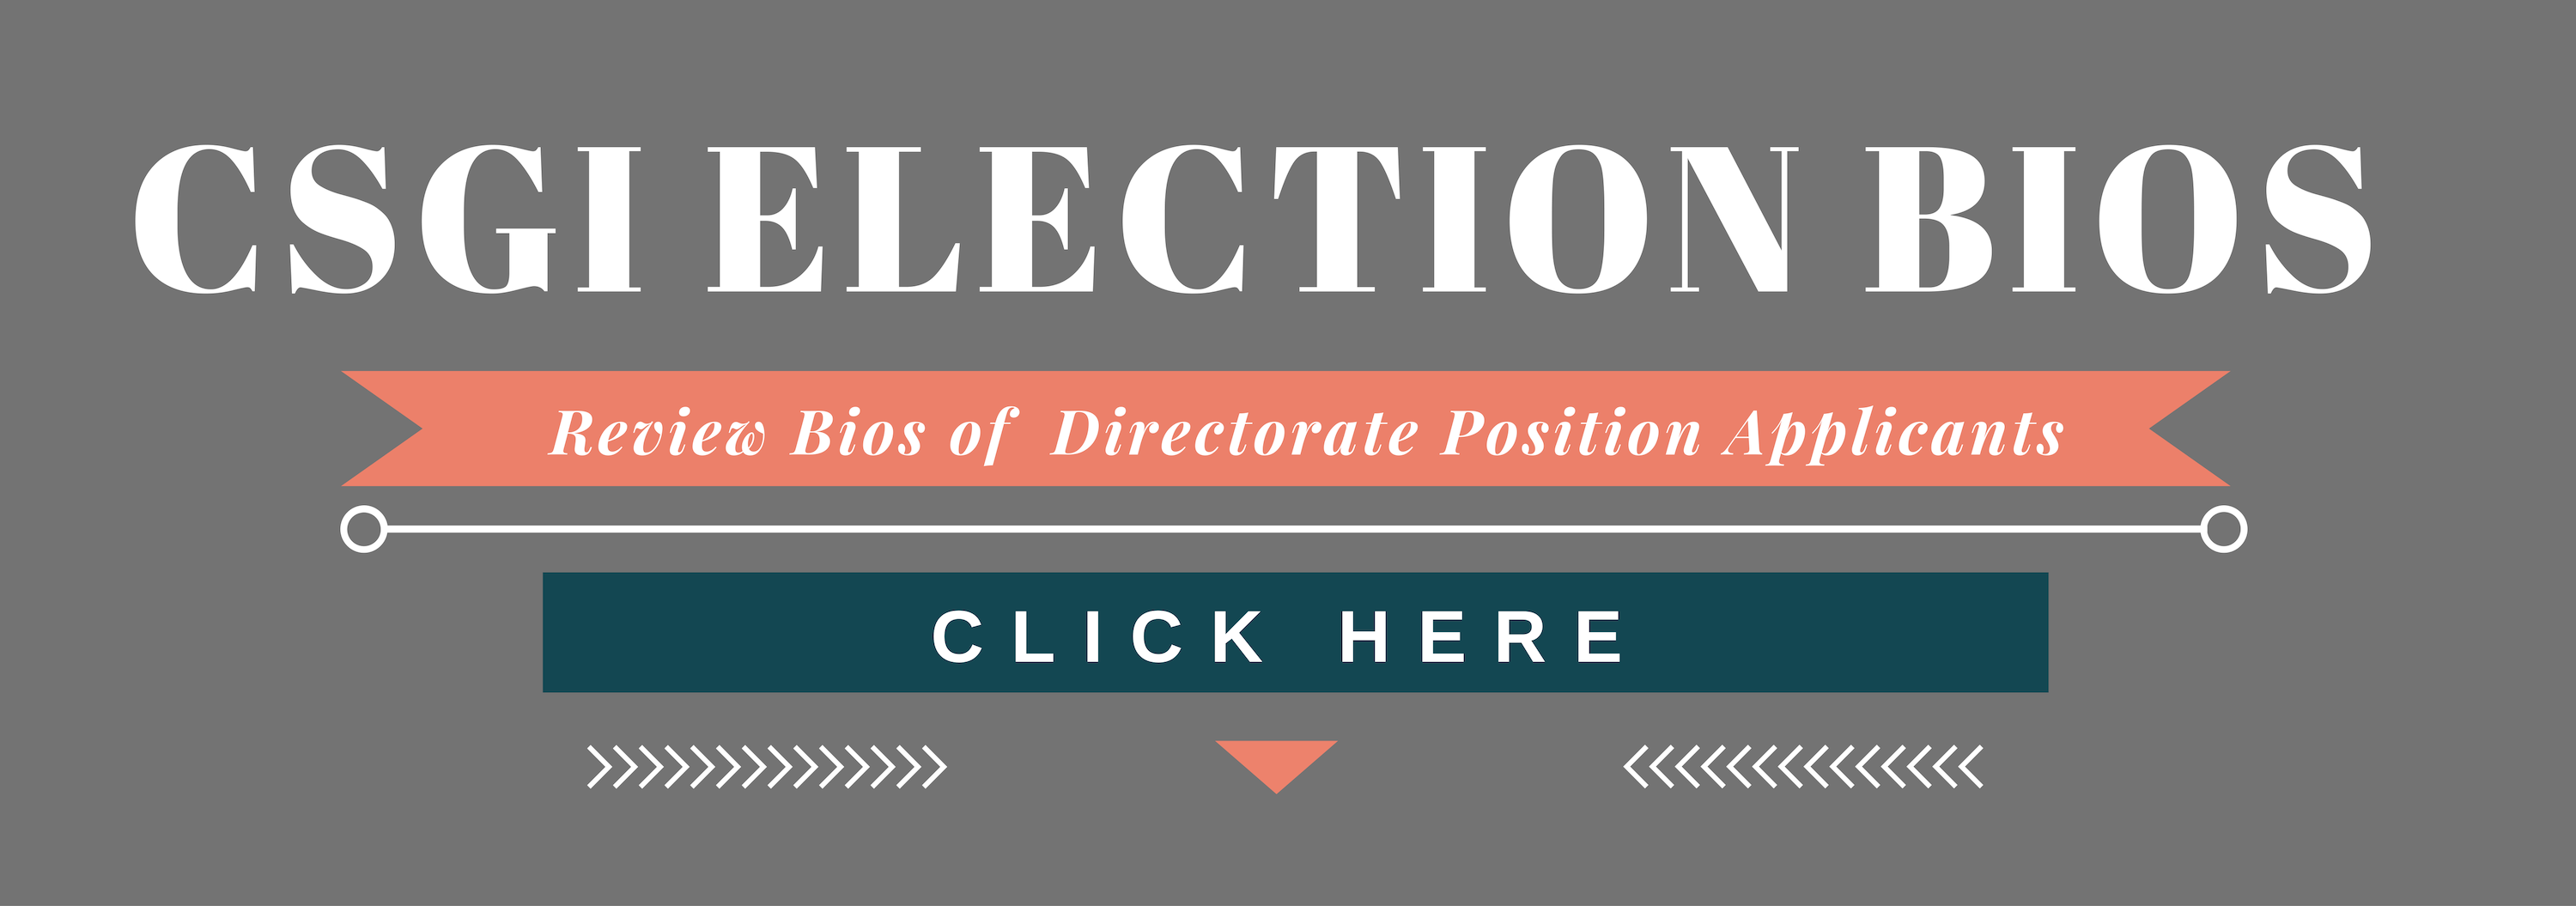 CSGI Election Bio Reviews for Directorate Applicants